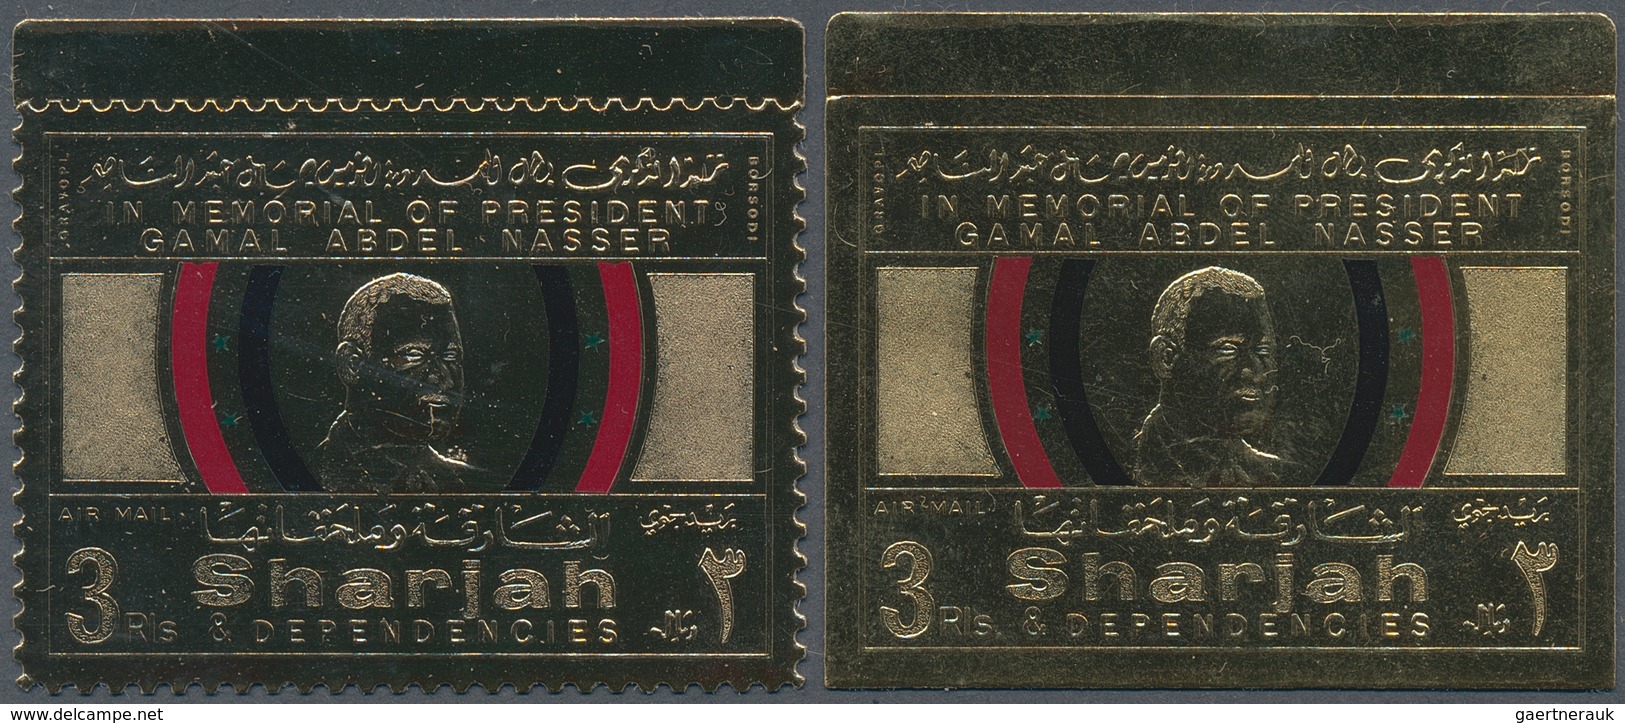 24035 Schardscha / Sharjah: 1970 (ca.), Prominent Persons 'In Memoriam President NASSER' Gold Foil Stamps - Sharjah